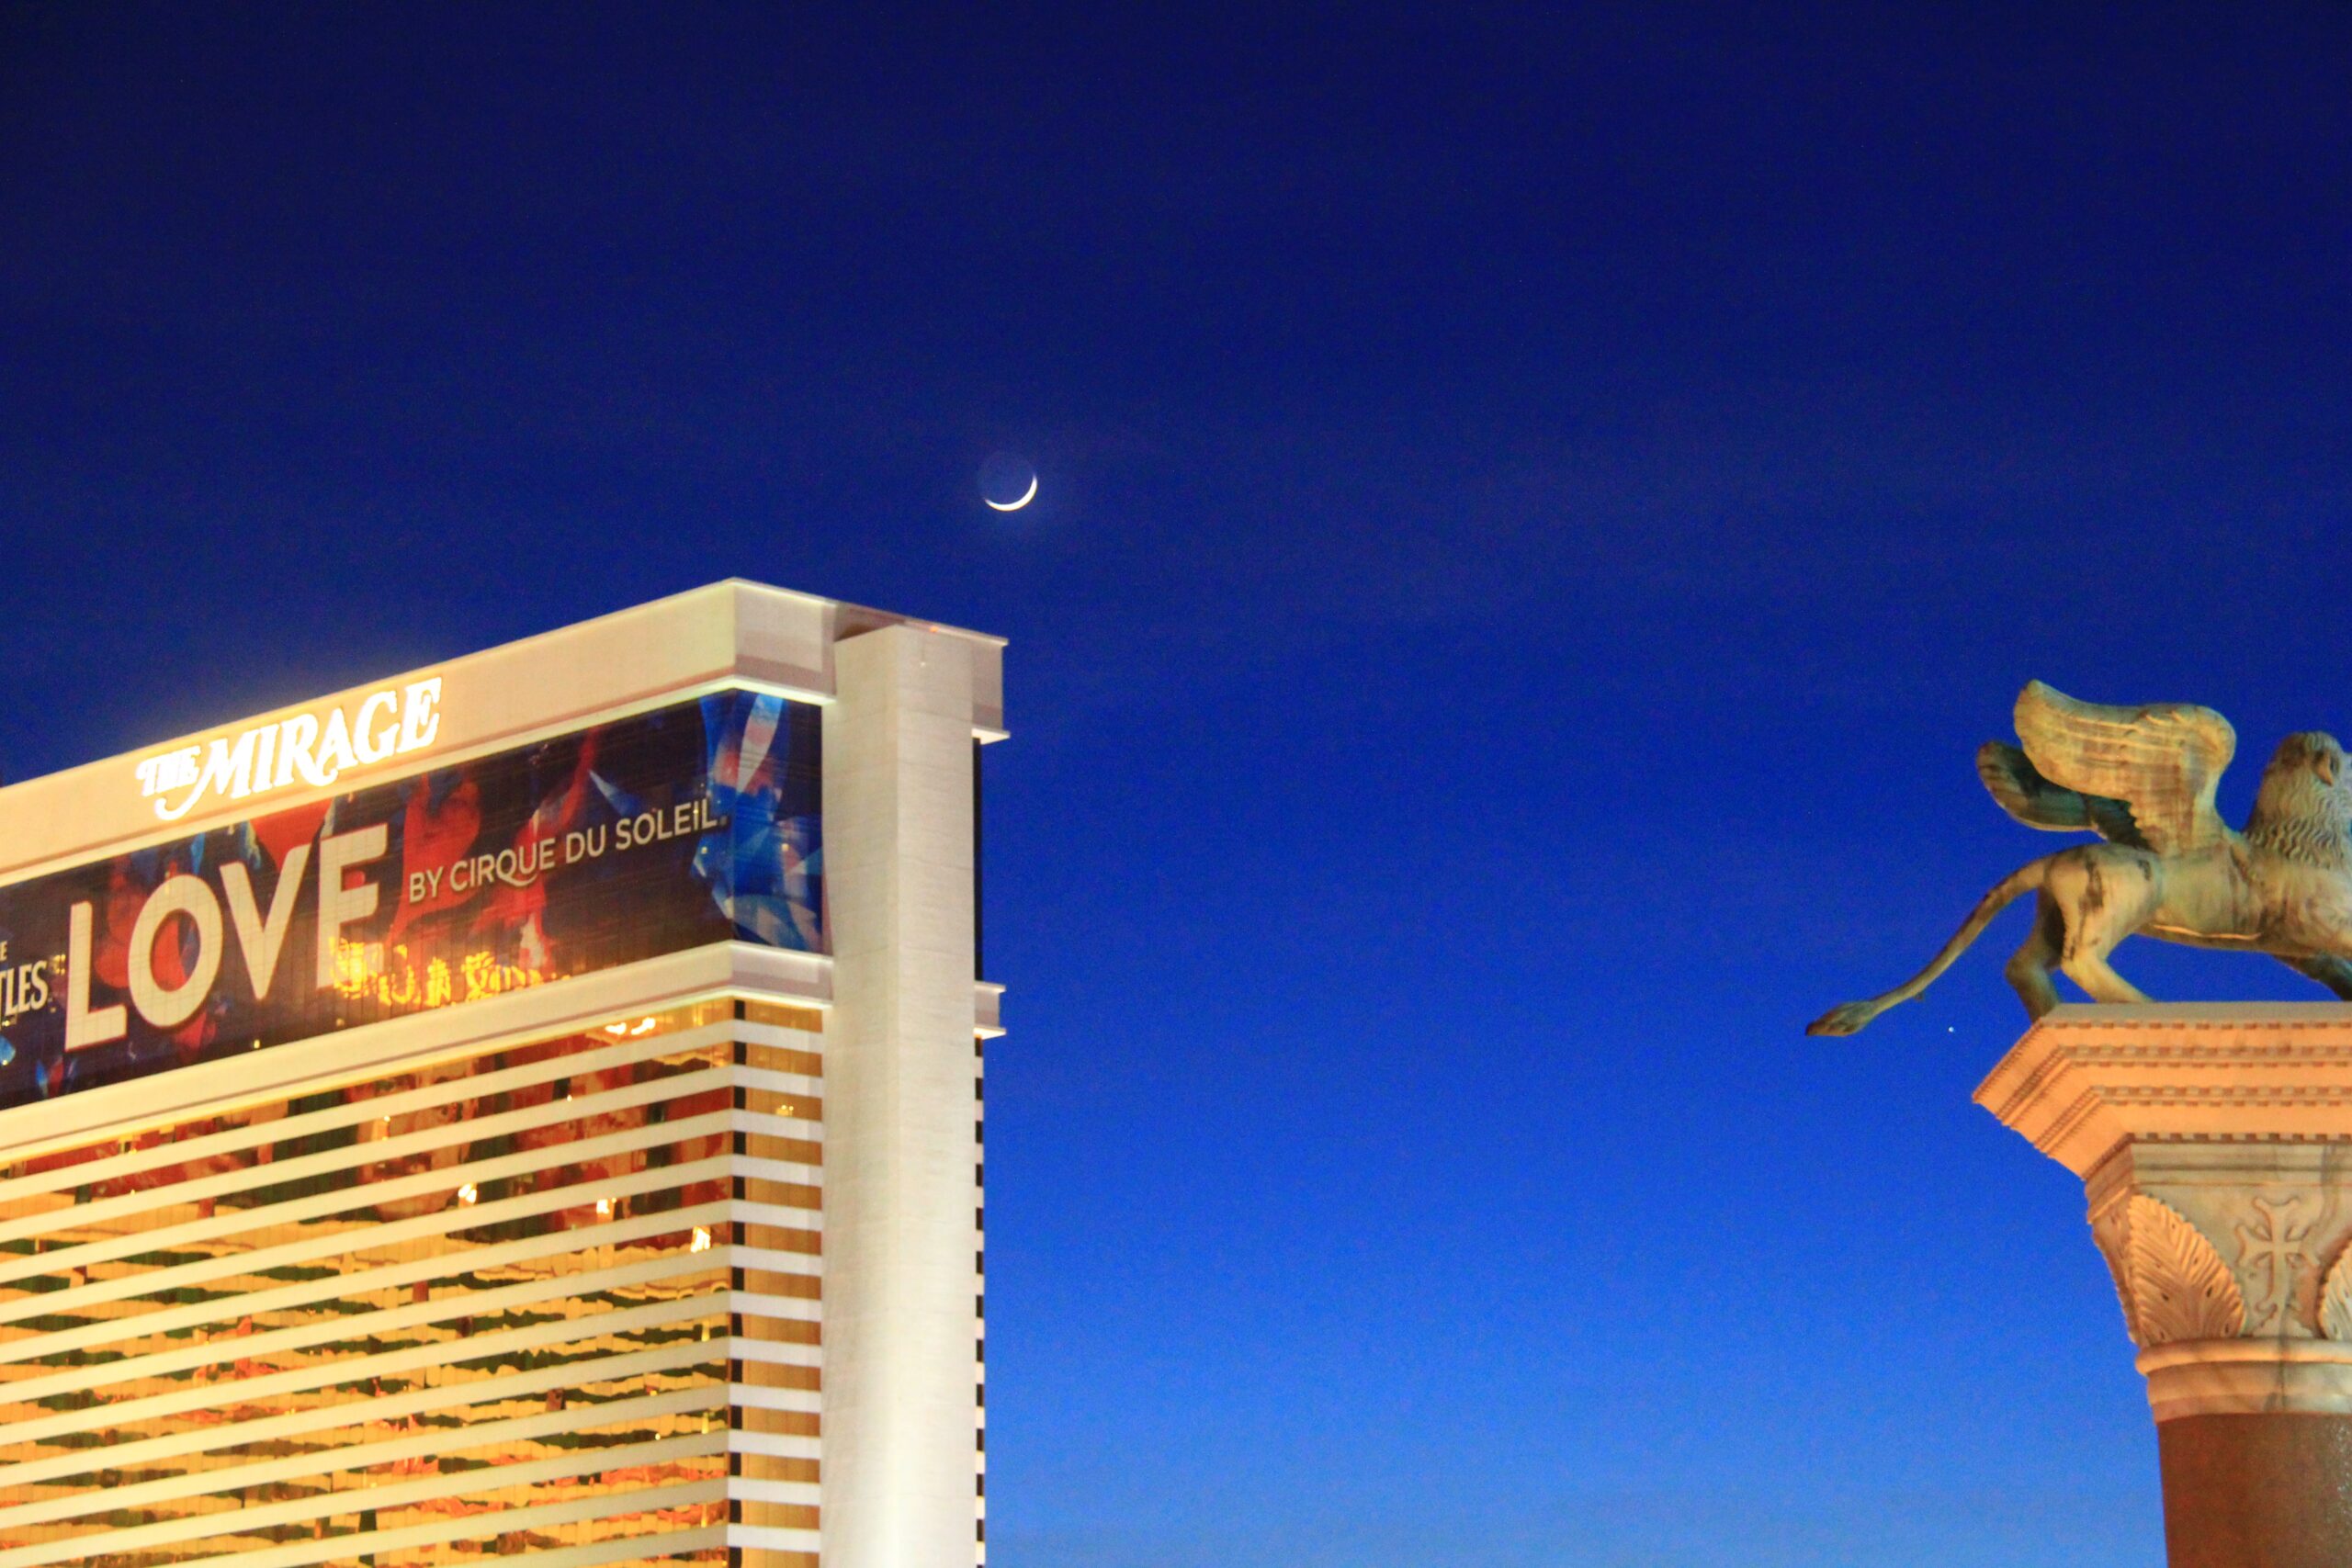 The Mirage Casino Hotel